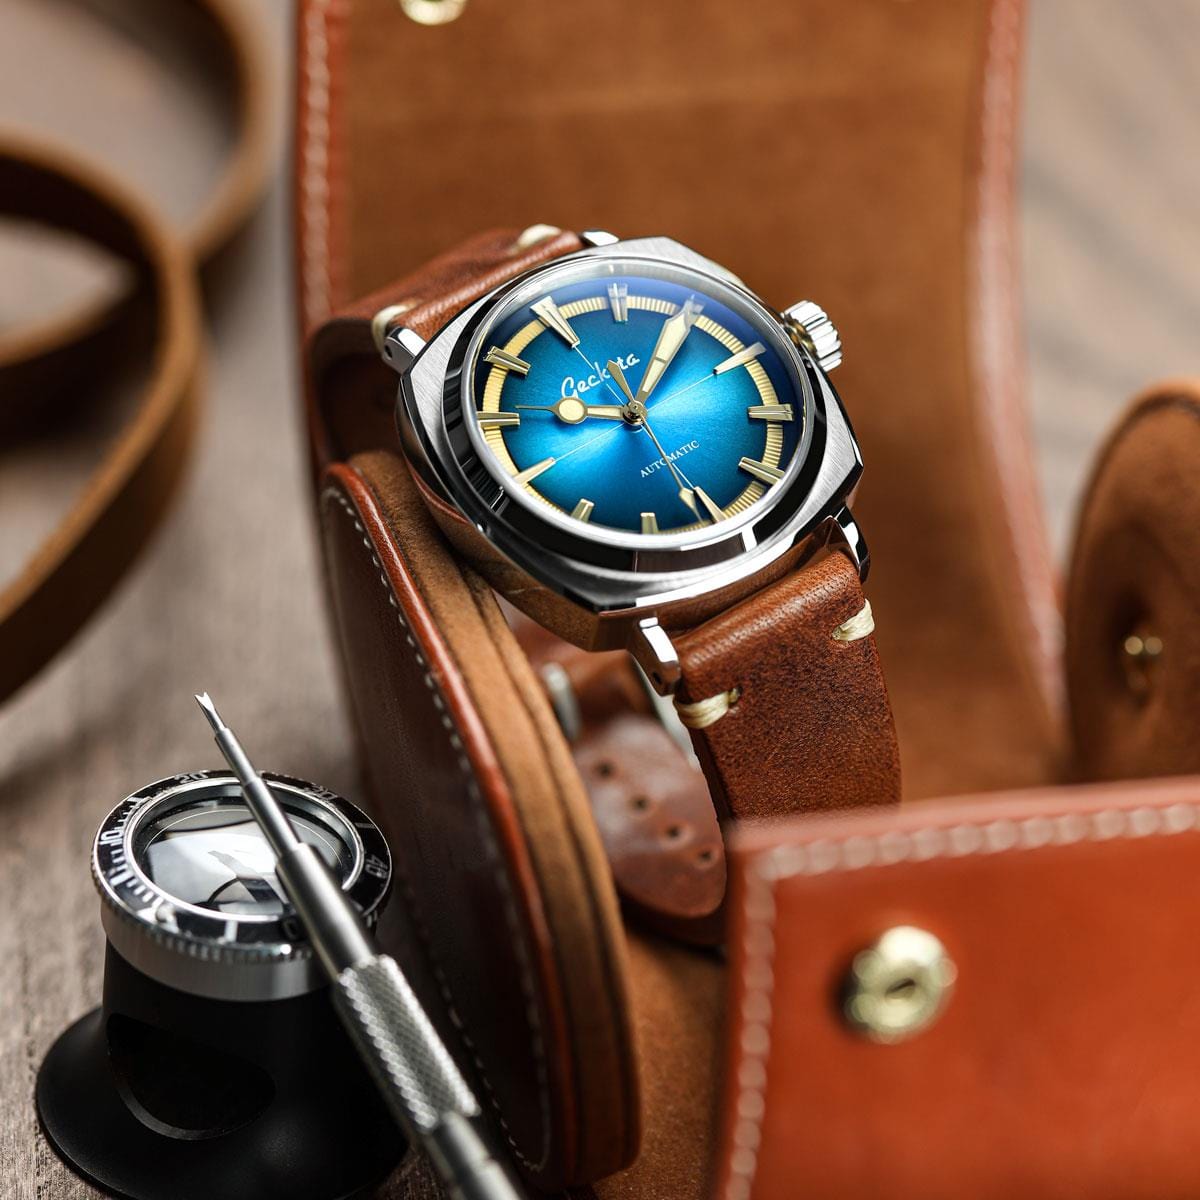 Geckota Pioneer Automatic Watch Arctic Blue Edition VS-369-4